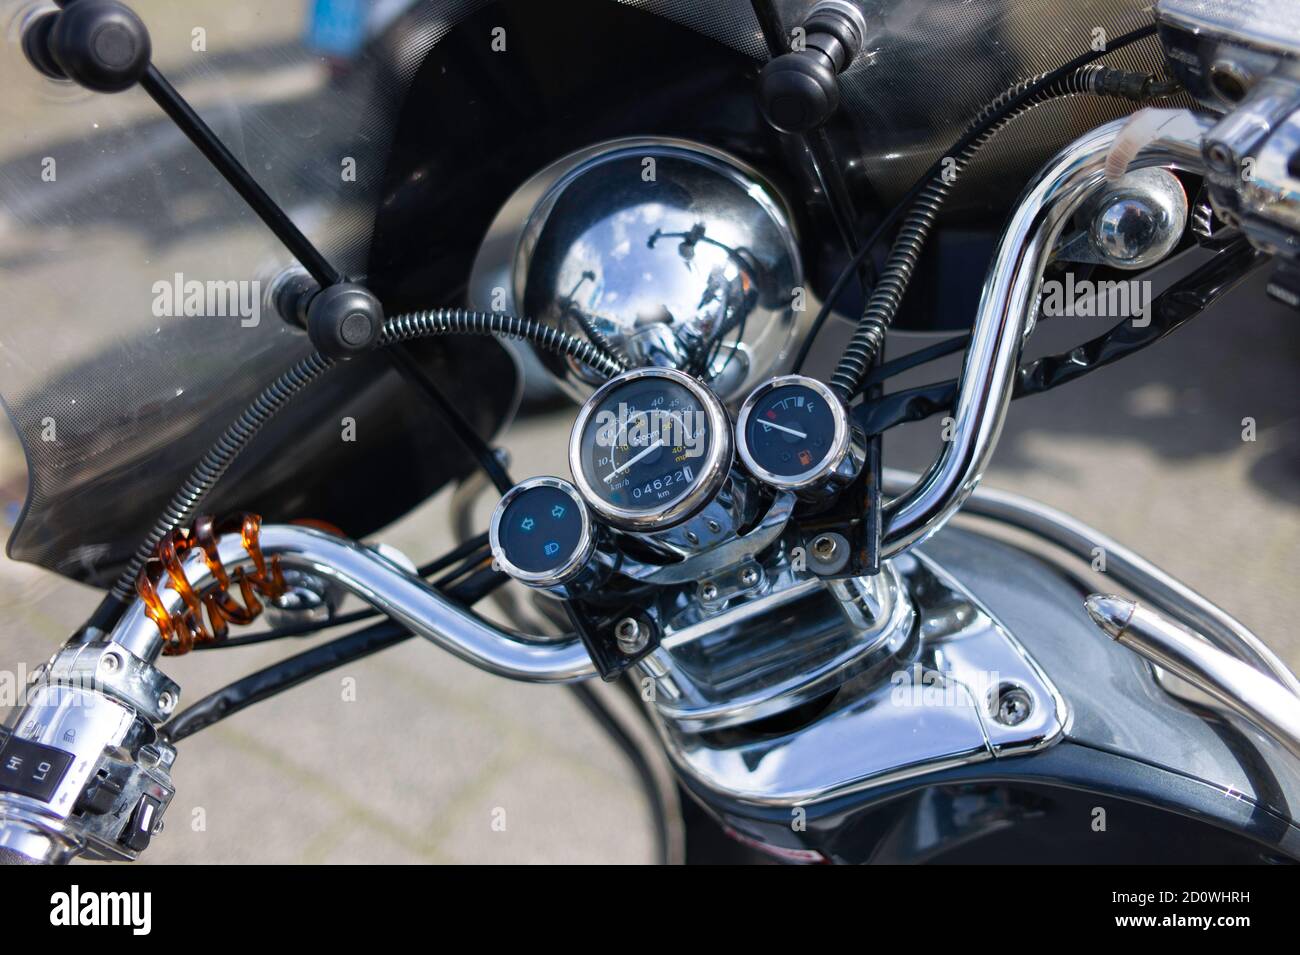 Gran potente moto con parabrisas delantero o carenado Fotografía de stock -  Alamy